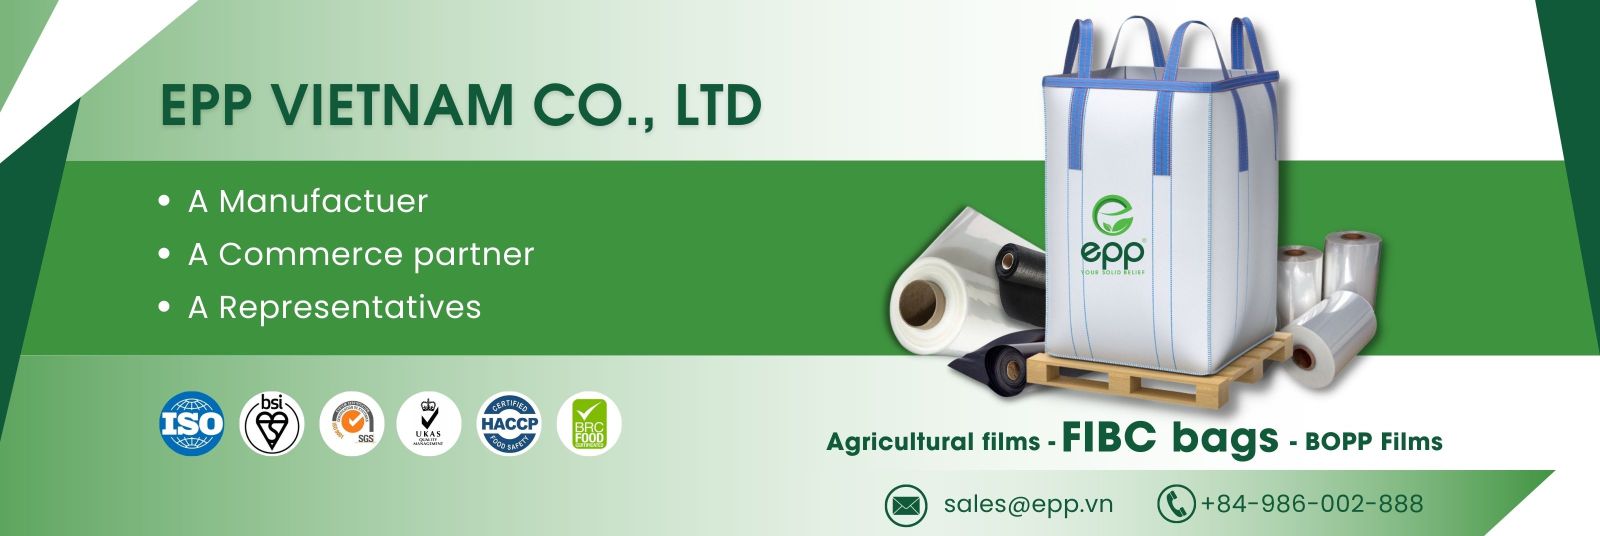 EPP-Vietnam-company-limited-FIBCs-bulk-bags-agricultural-films-BOPP-films%20(1).jpg